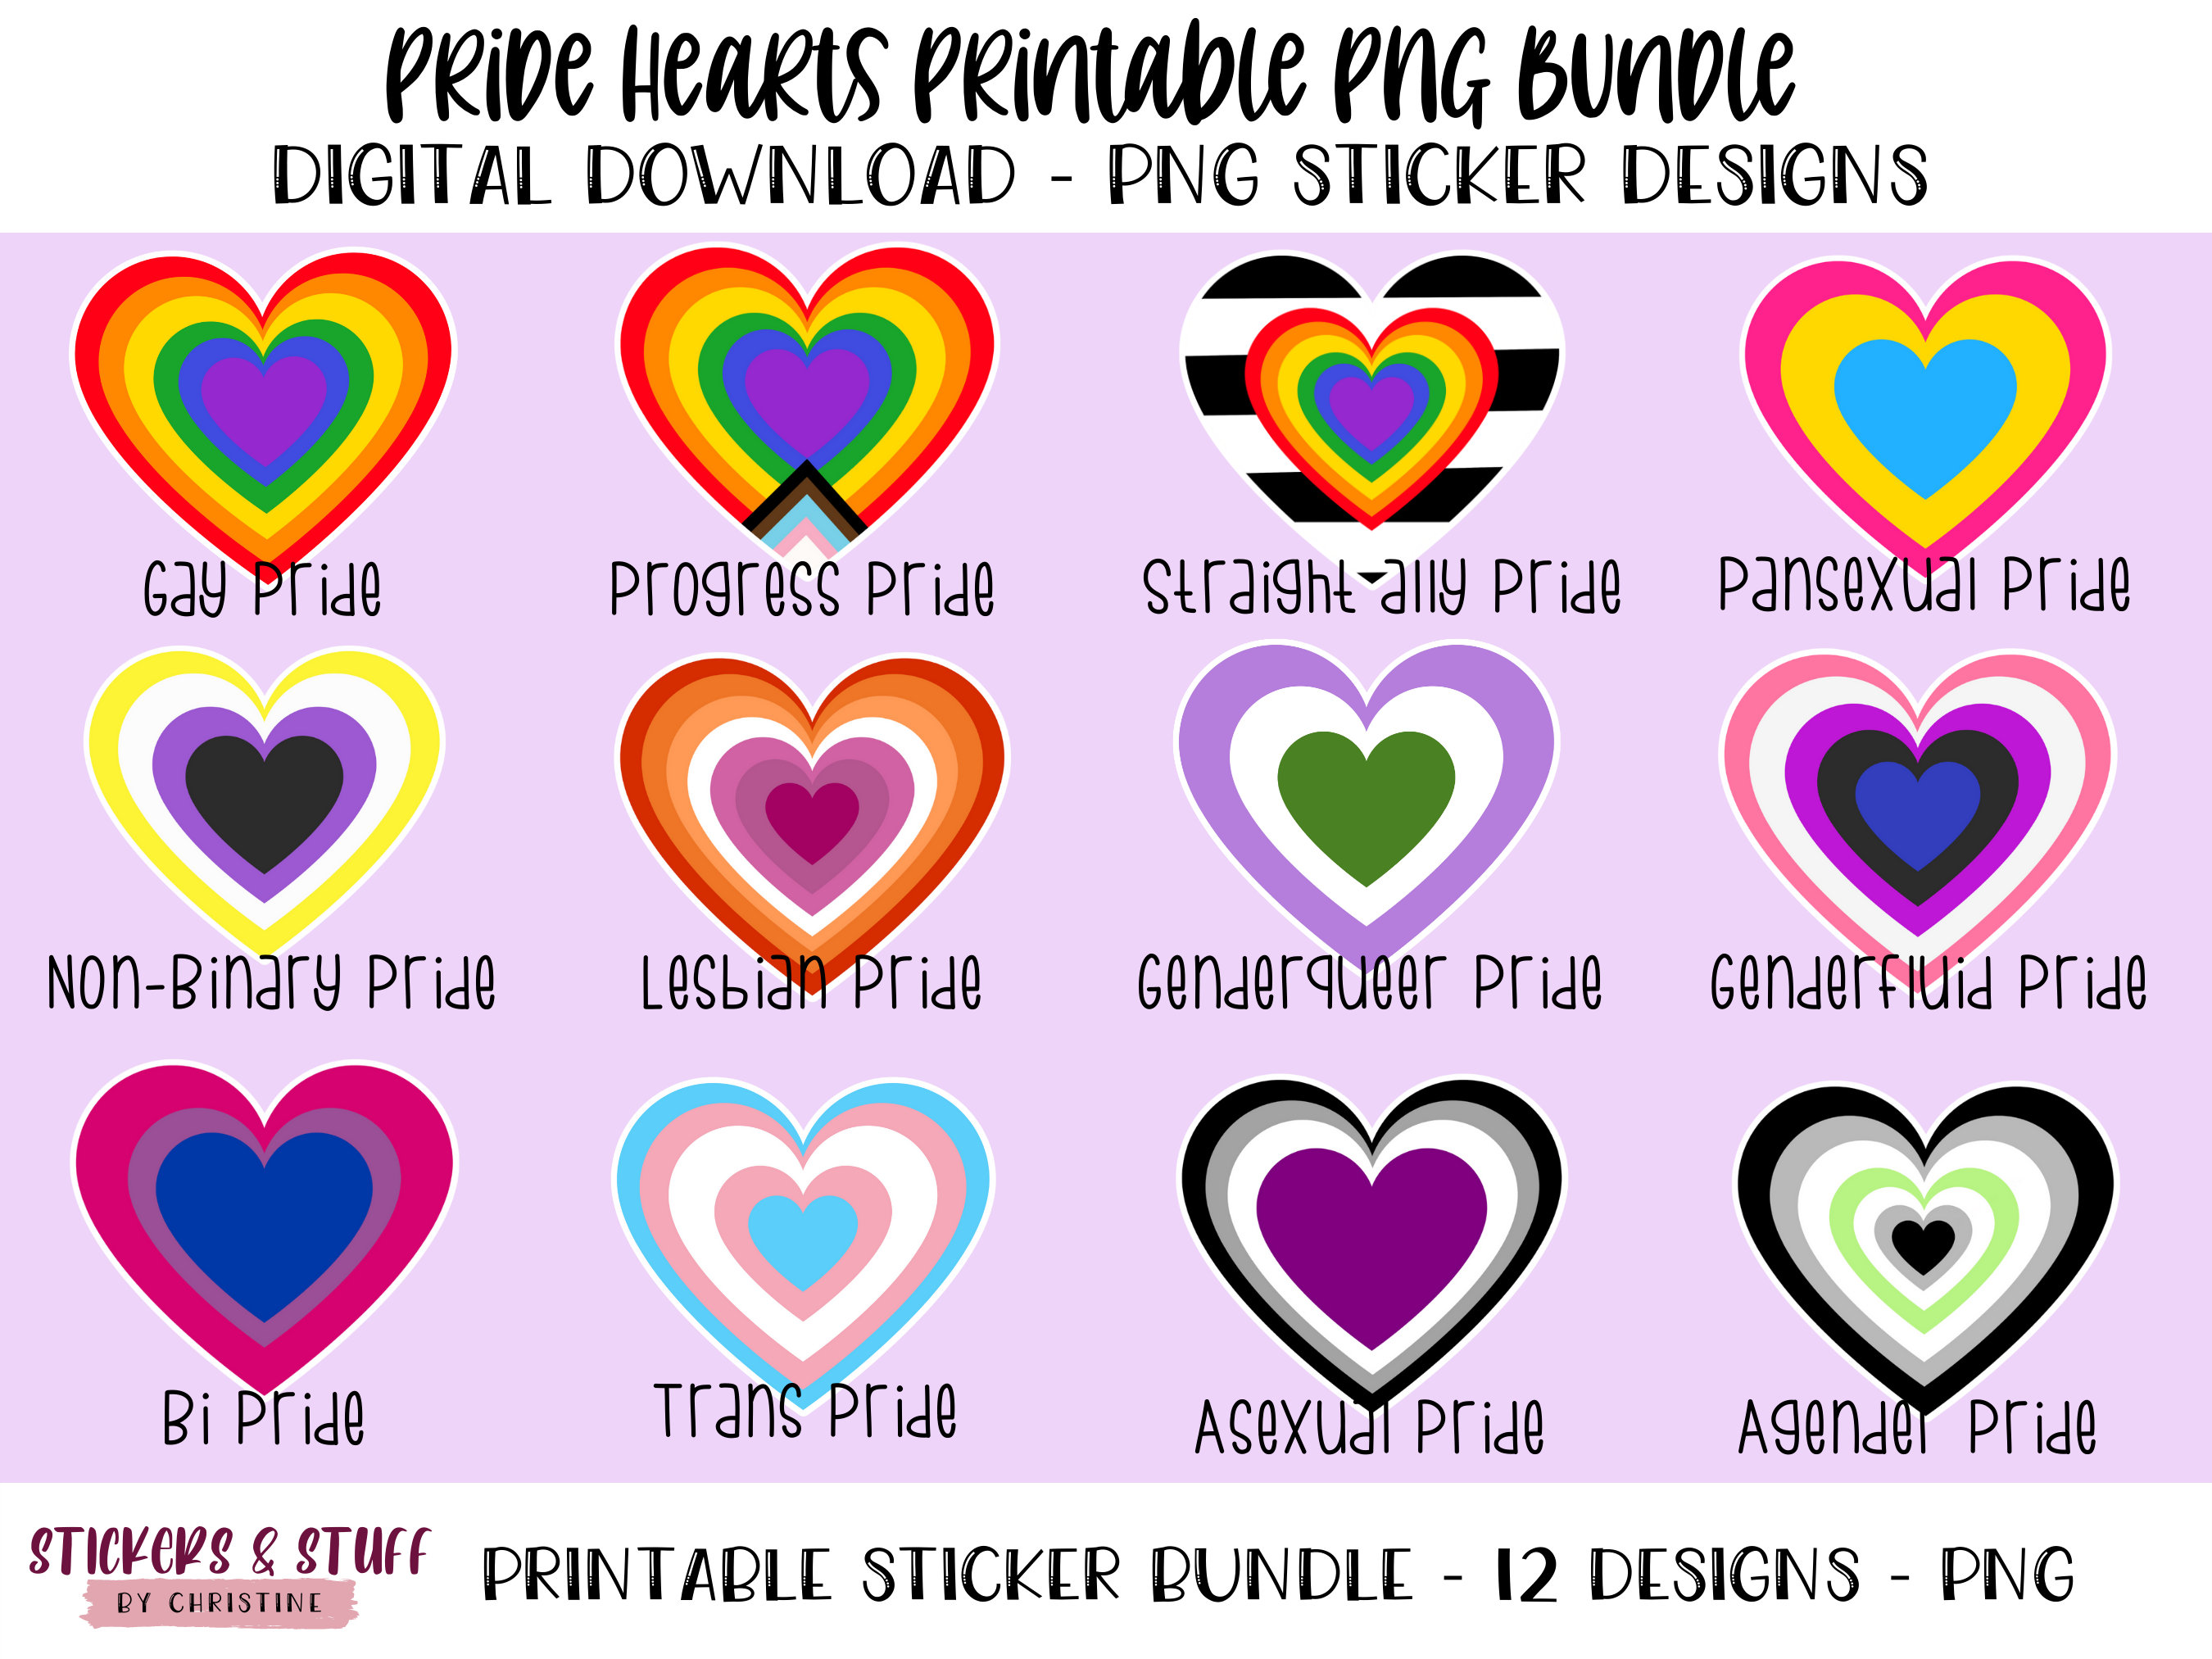 Printable Pride Heart-Shaped PNG Design Bundle, Digital Pride Stickers,  LGBTQ Designs, LGBTQ Stickers, Print and Cut Pride Sticker Pack